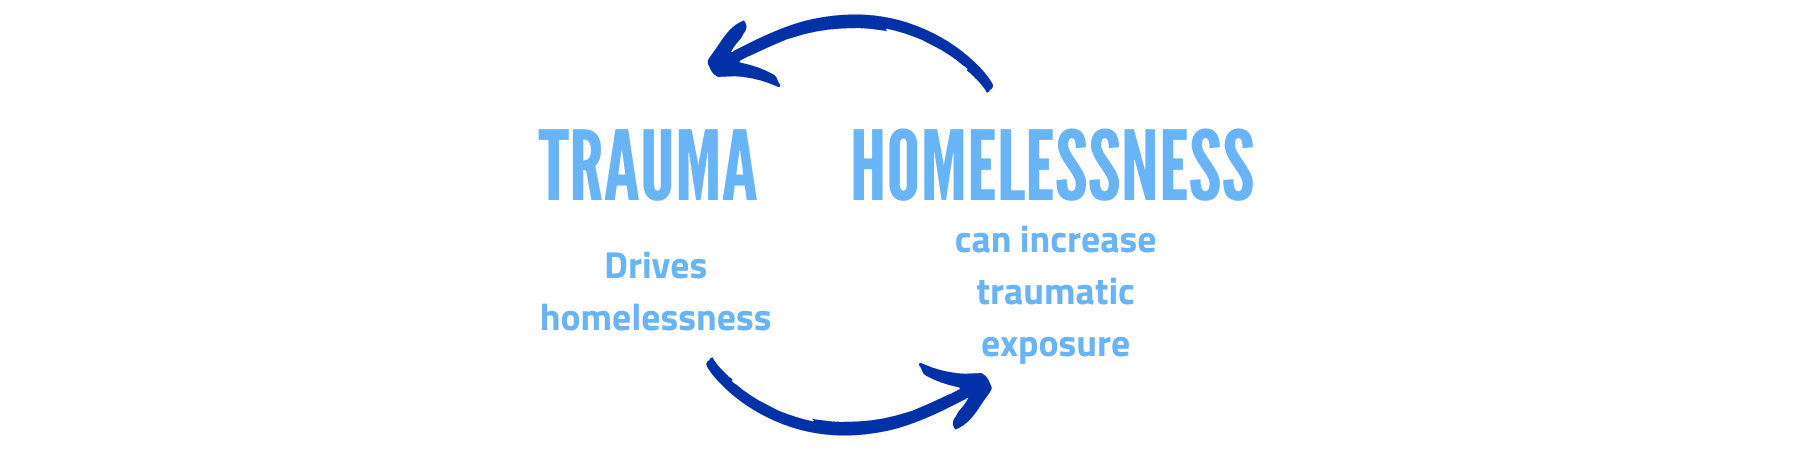 trauma and homelessness cycle